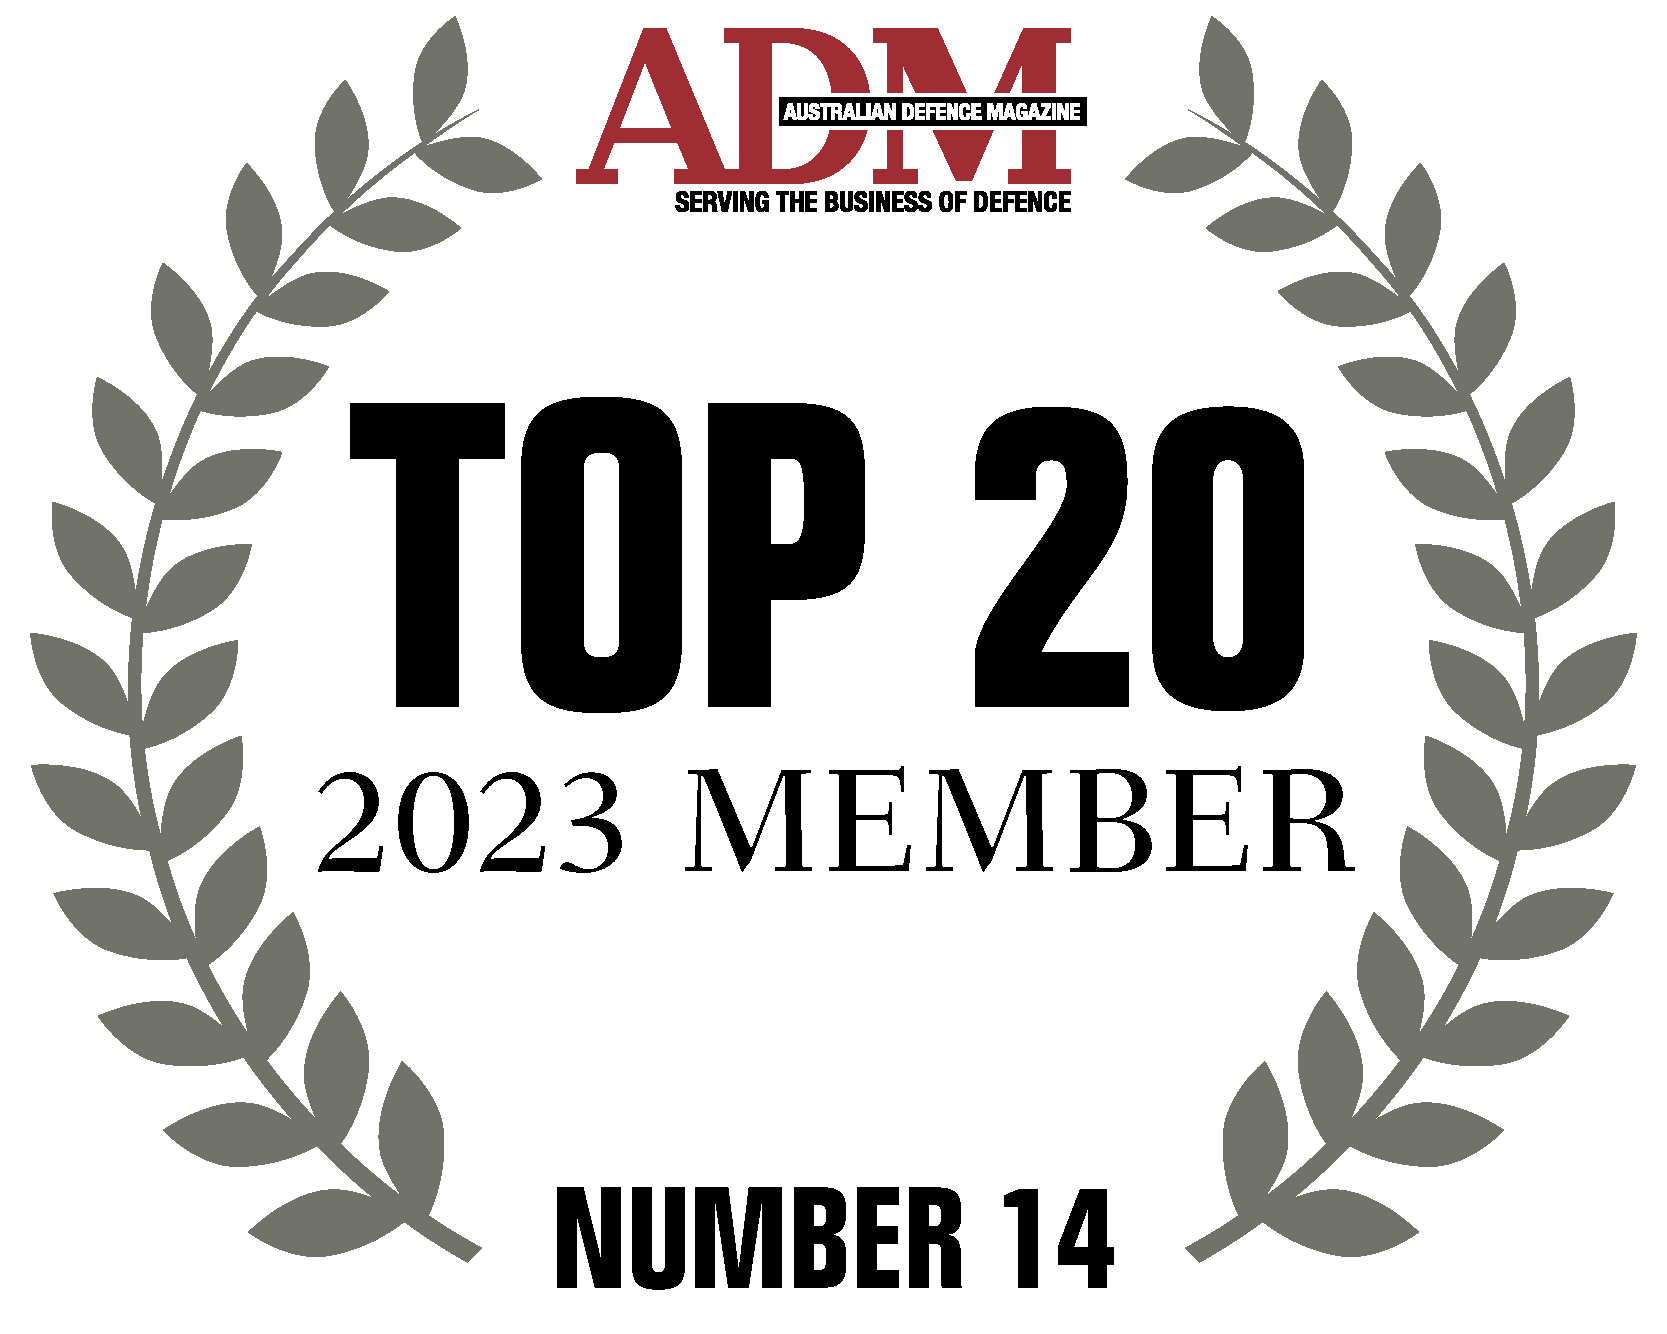 ADM’s Top 20 SMEs 2023